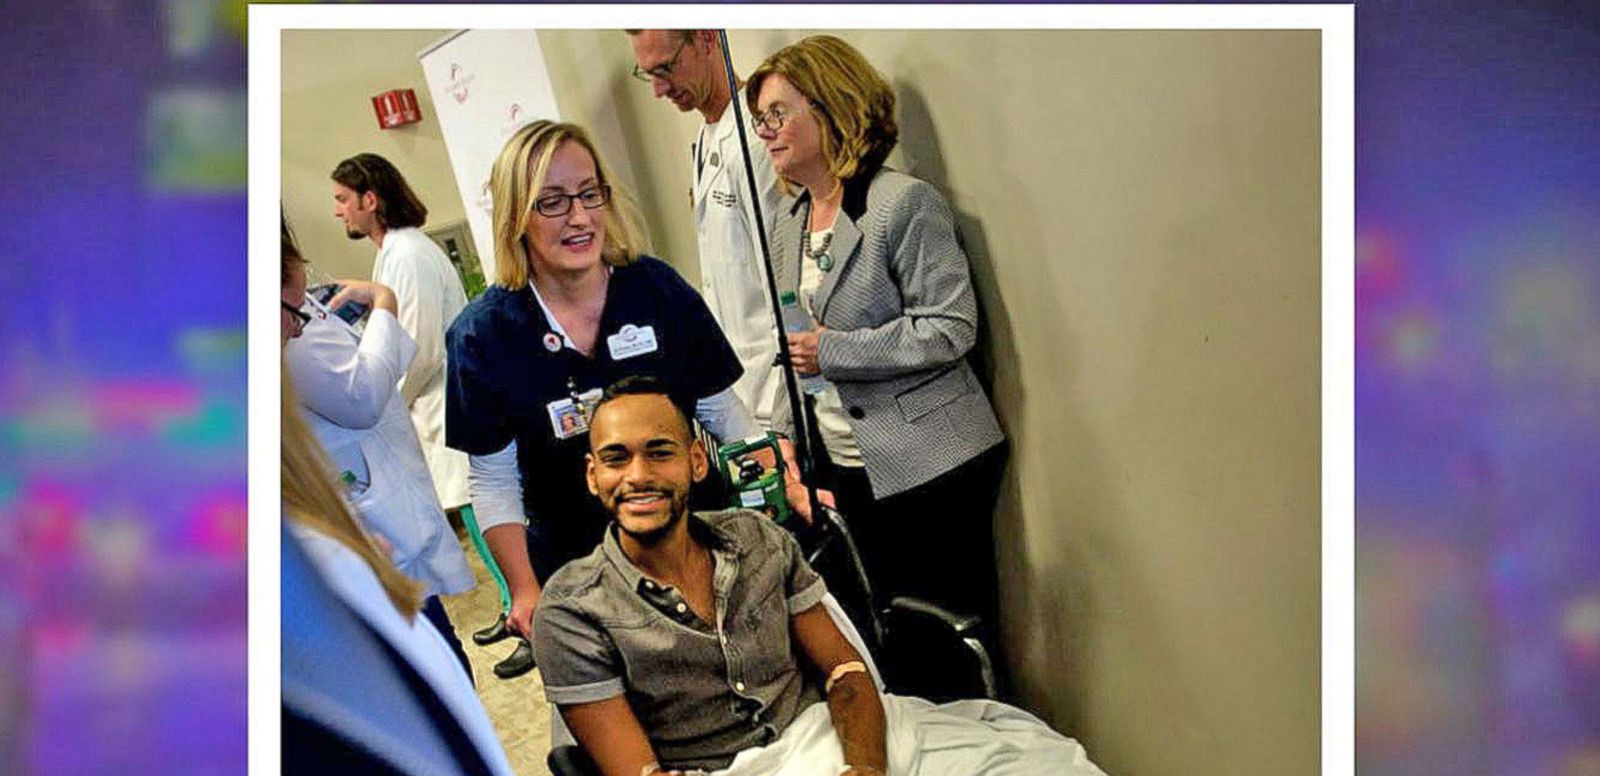 Hospital Employees Who Treated Orlando Massacre Victims ‘Cried’